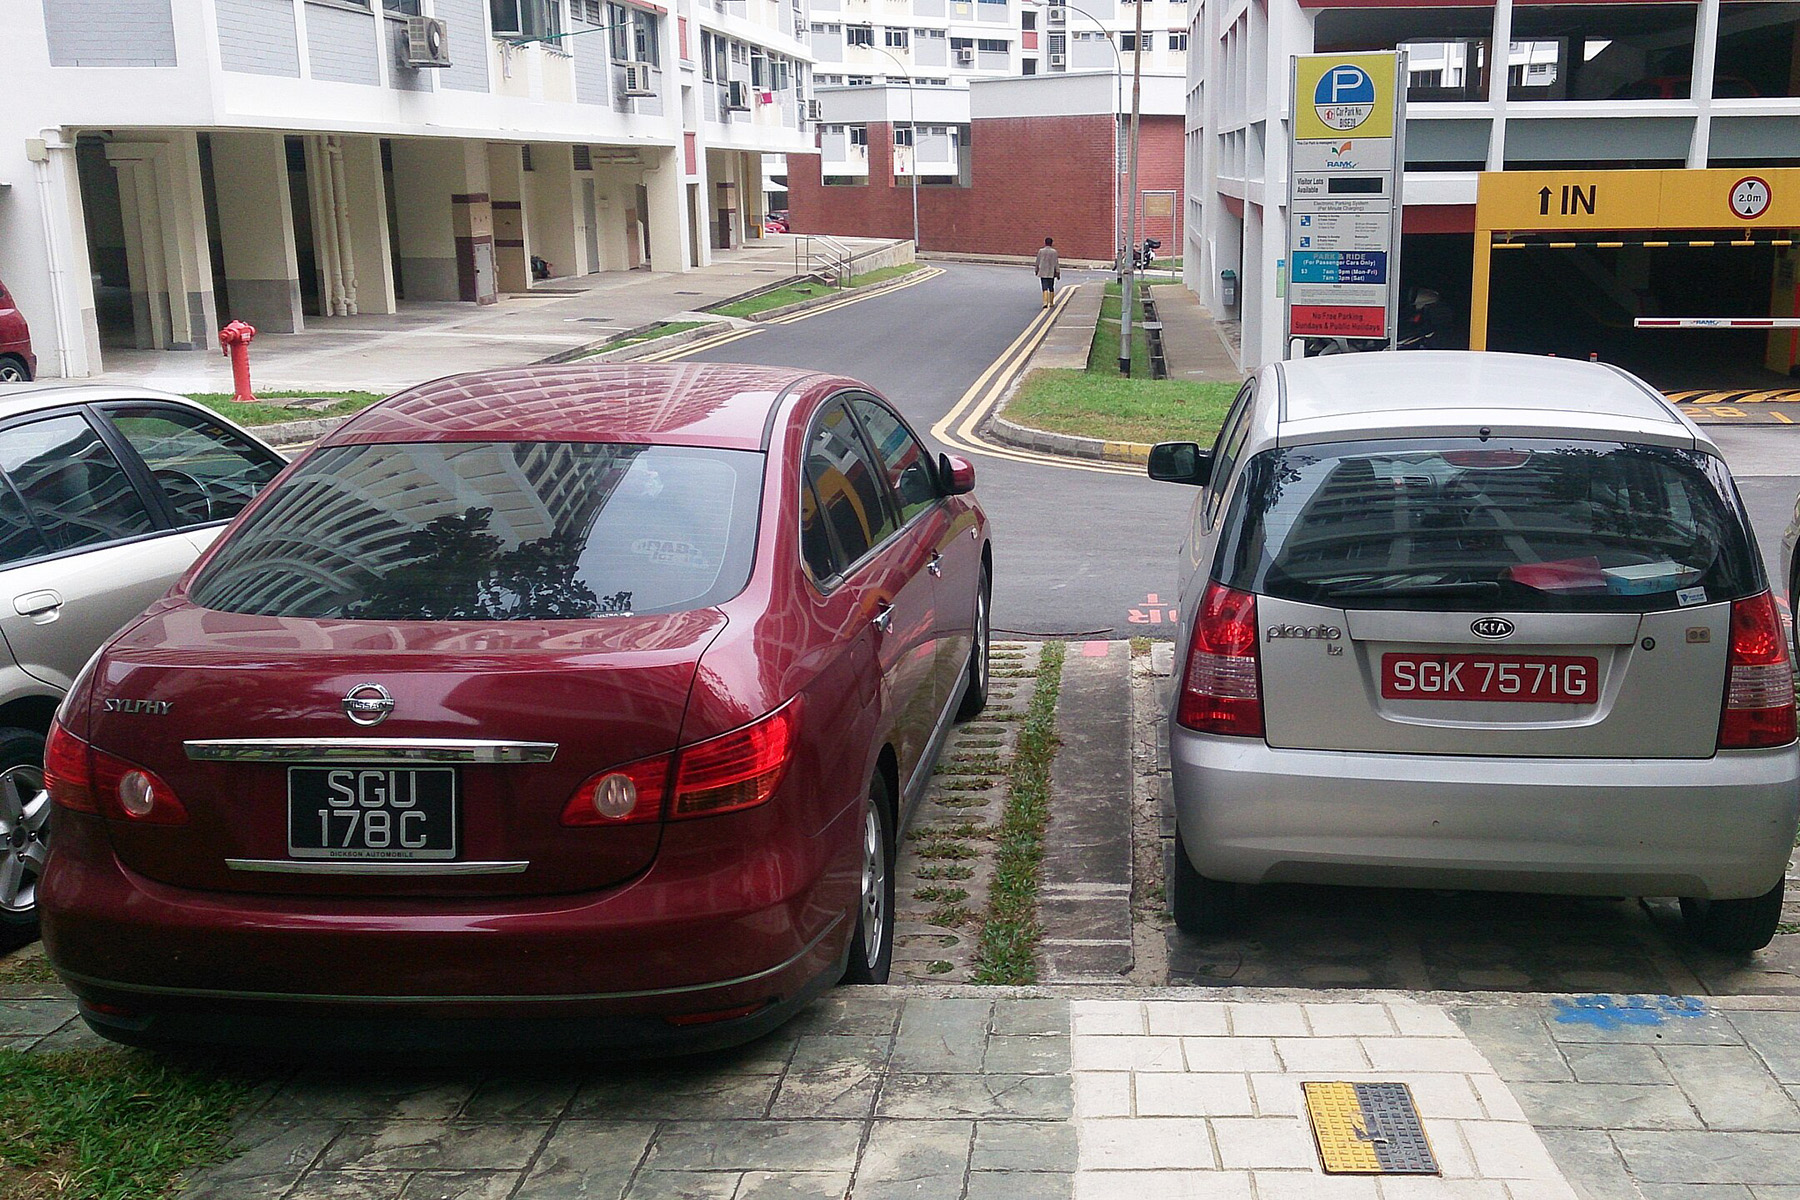 Regular and off-peak vehicle registration plates in Singapore.